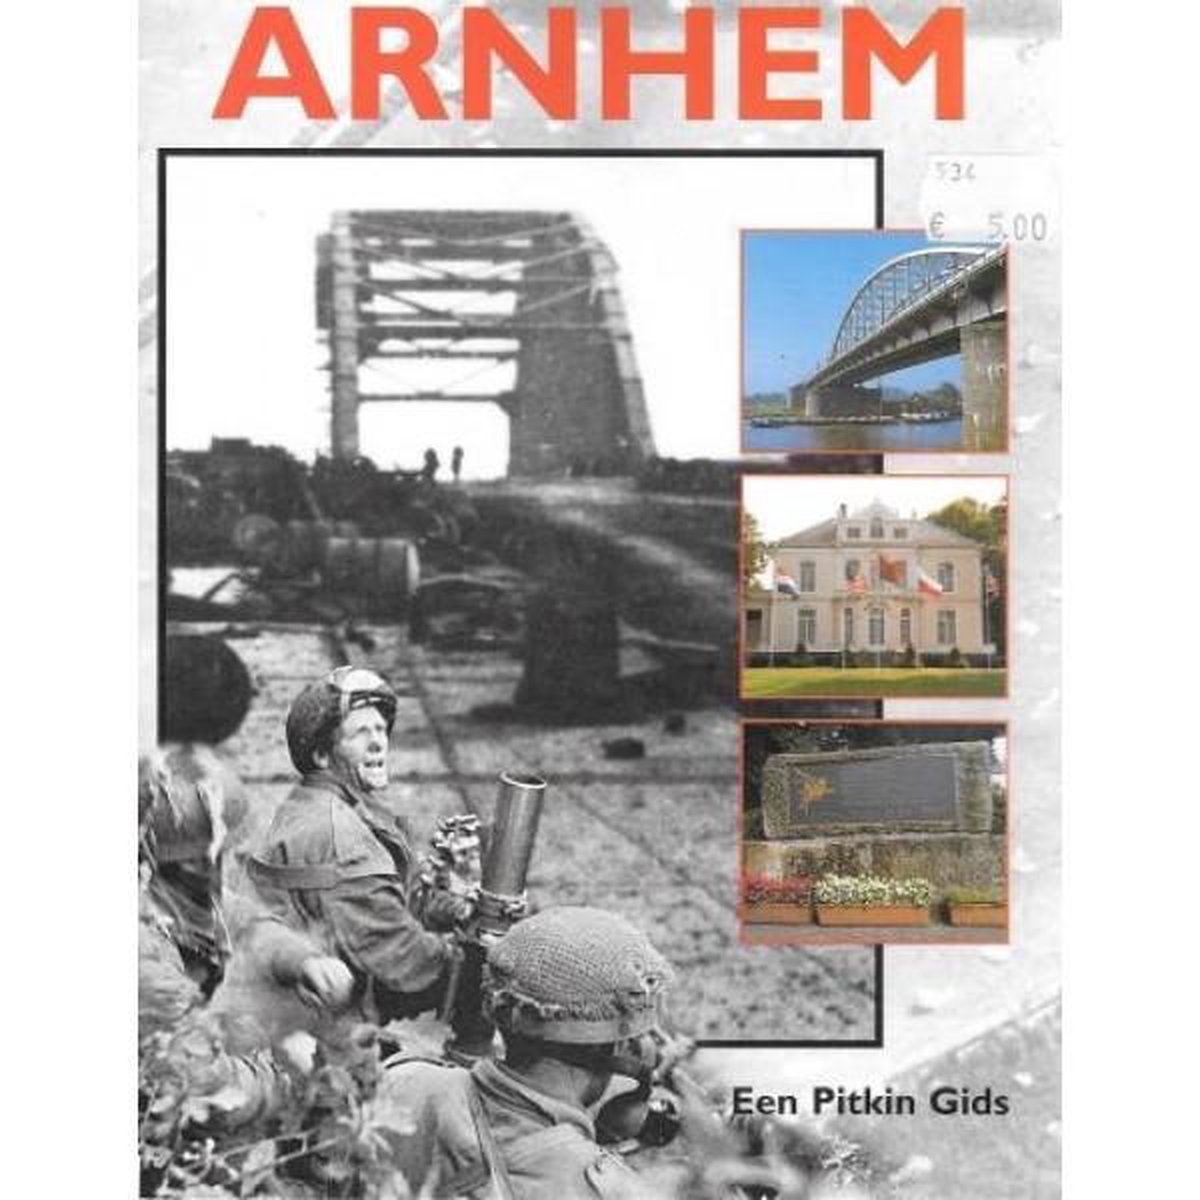 The Battle for Arnhem - Dutch